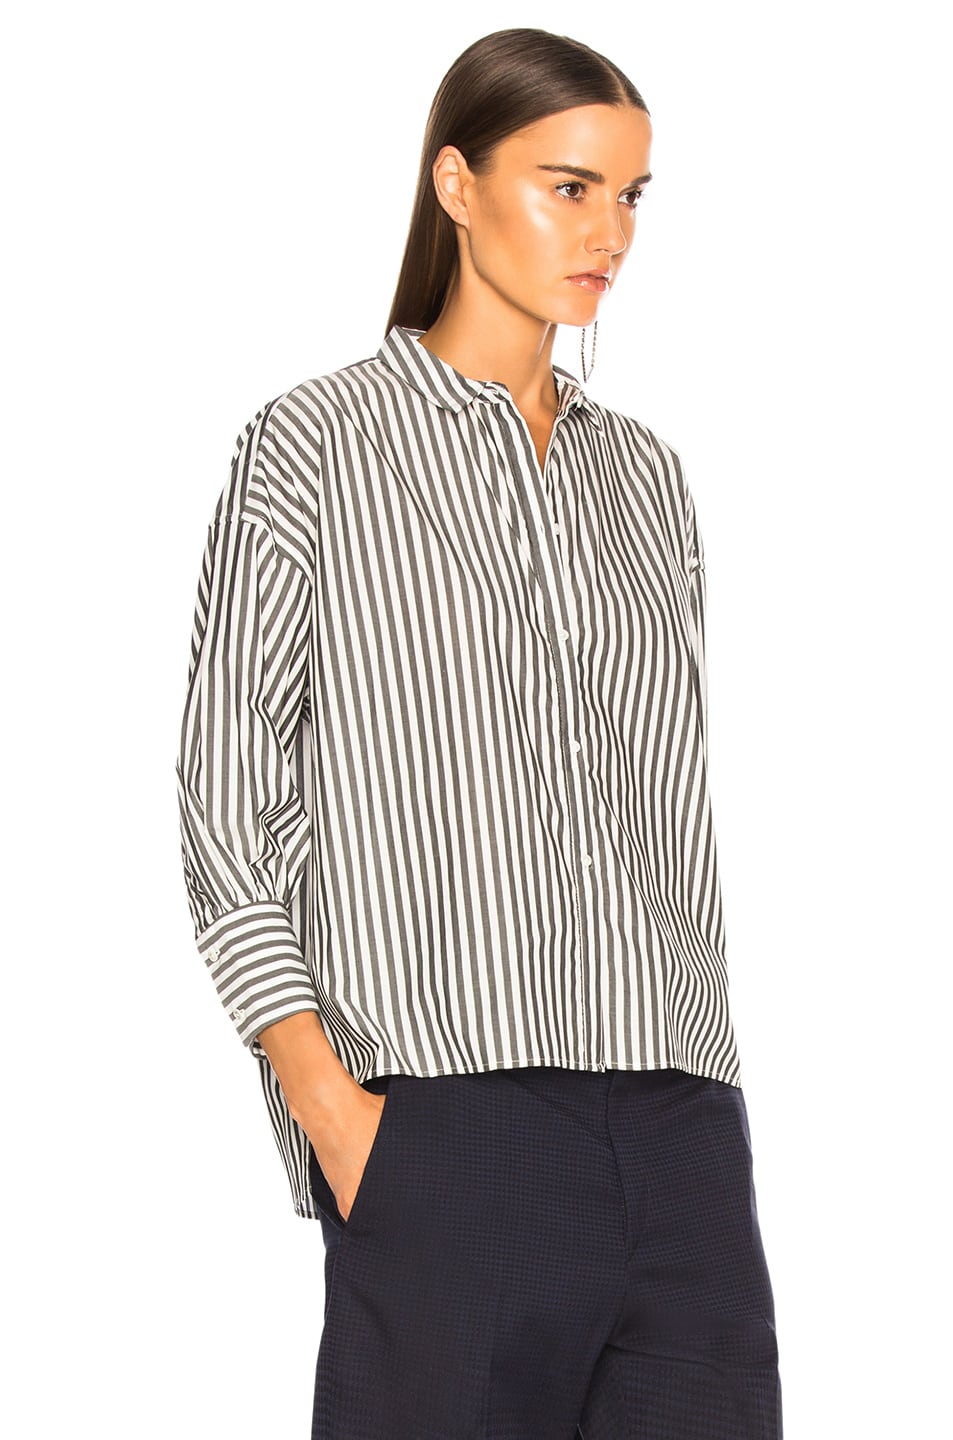 NILI LOTAN Fulton Shirt in Black & White Stripe | FWRD